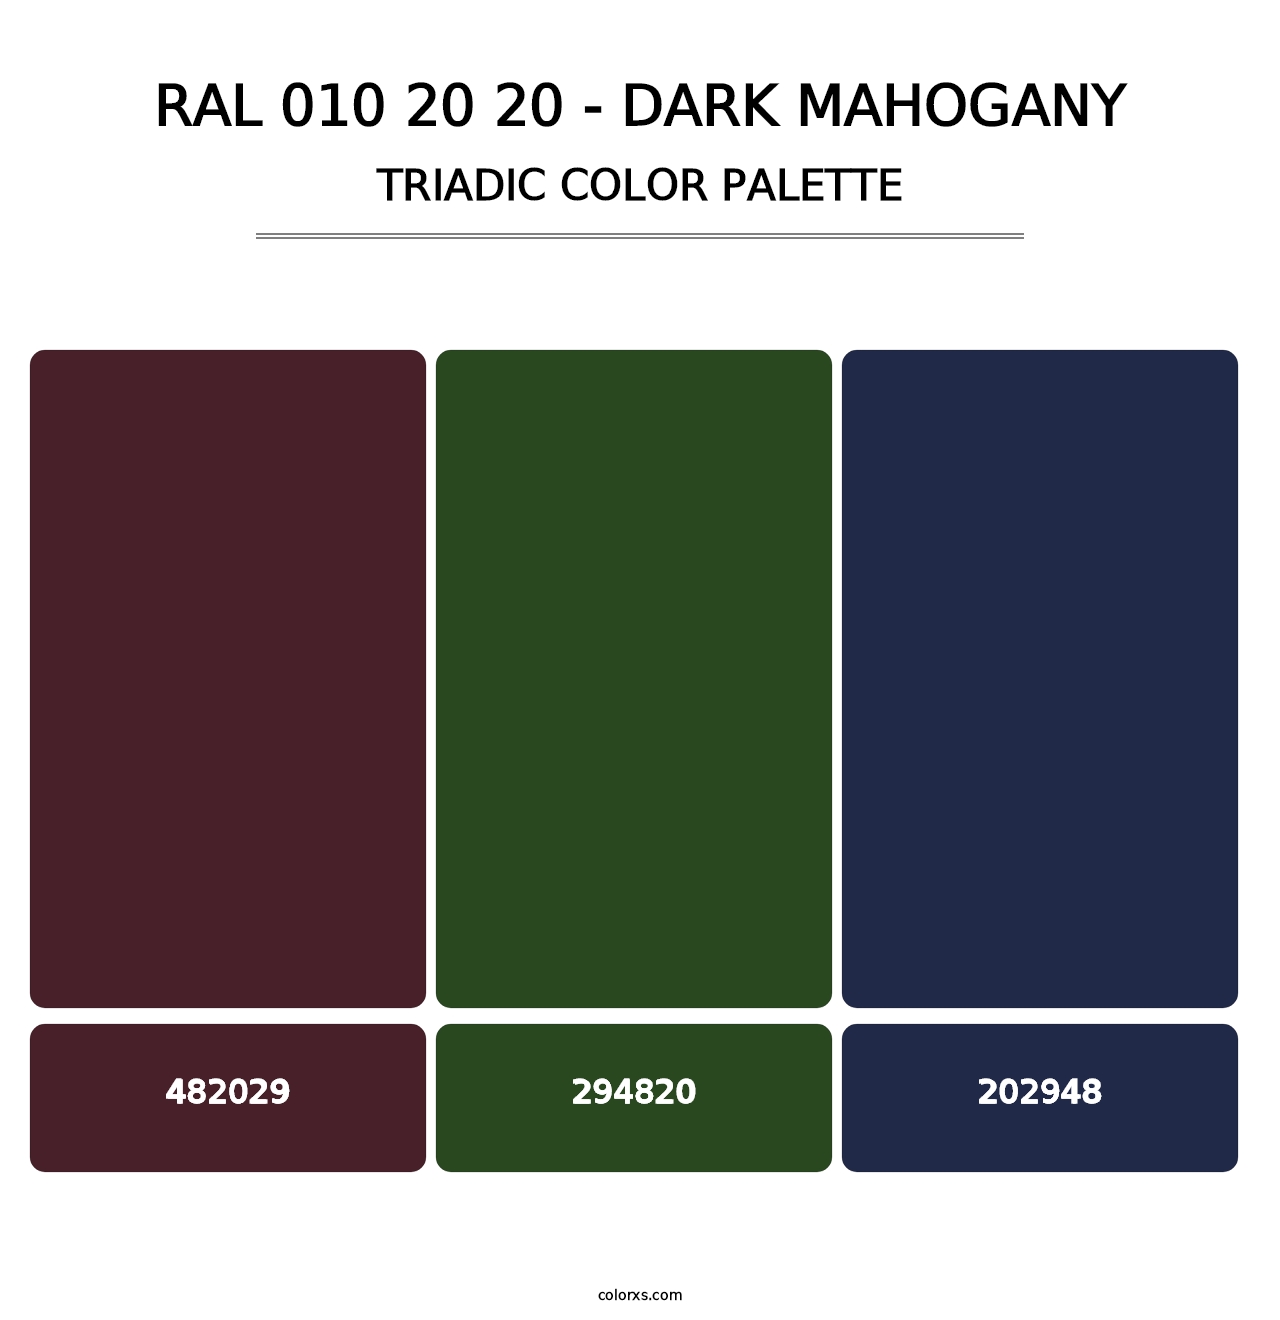 RAL 010 20 20 - Dark Mahogany - Triadic Color Palette